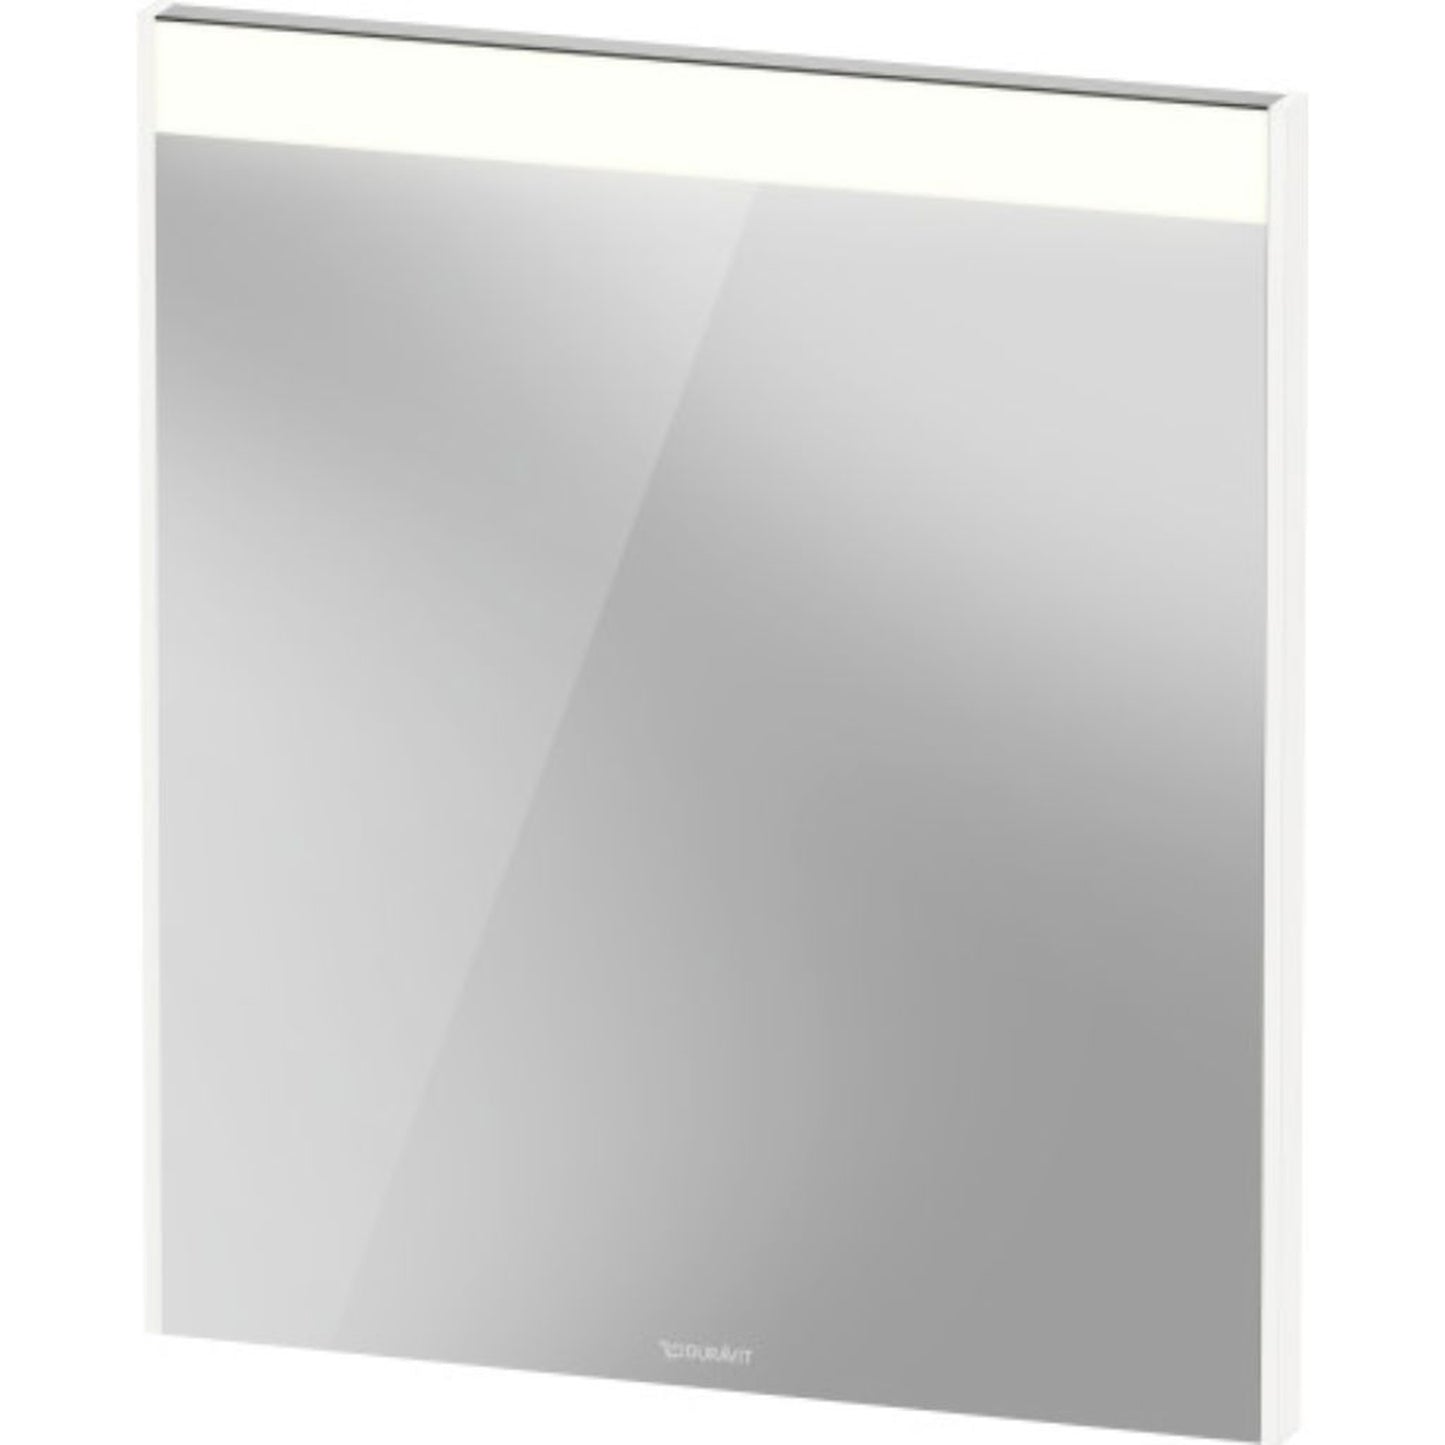 Duravit Brioso 24" x 28" x 1" Mirror With Lighting White Matt